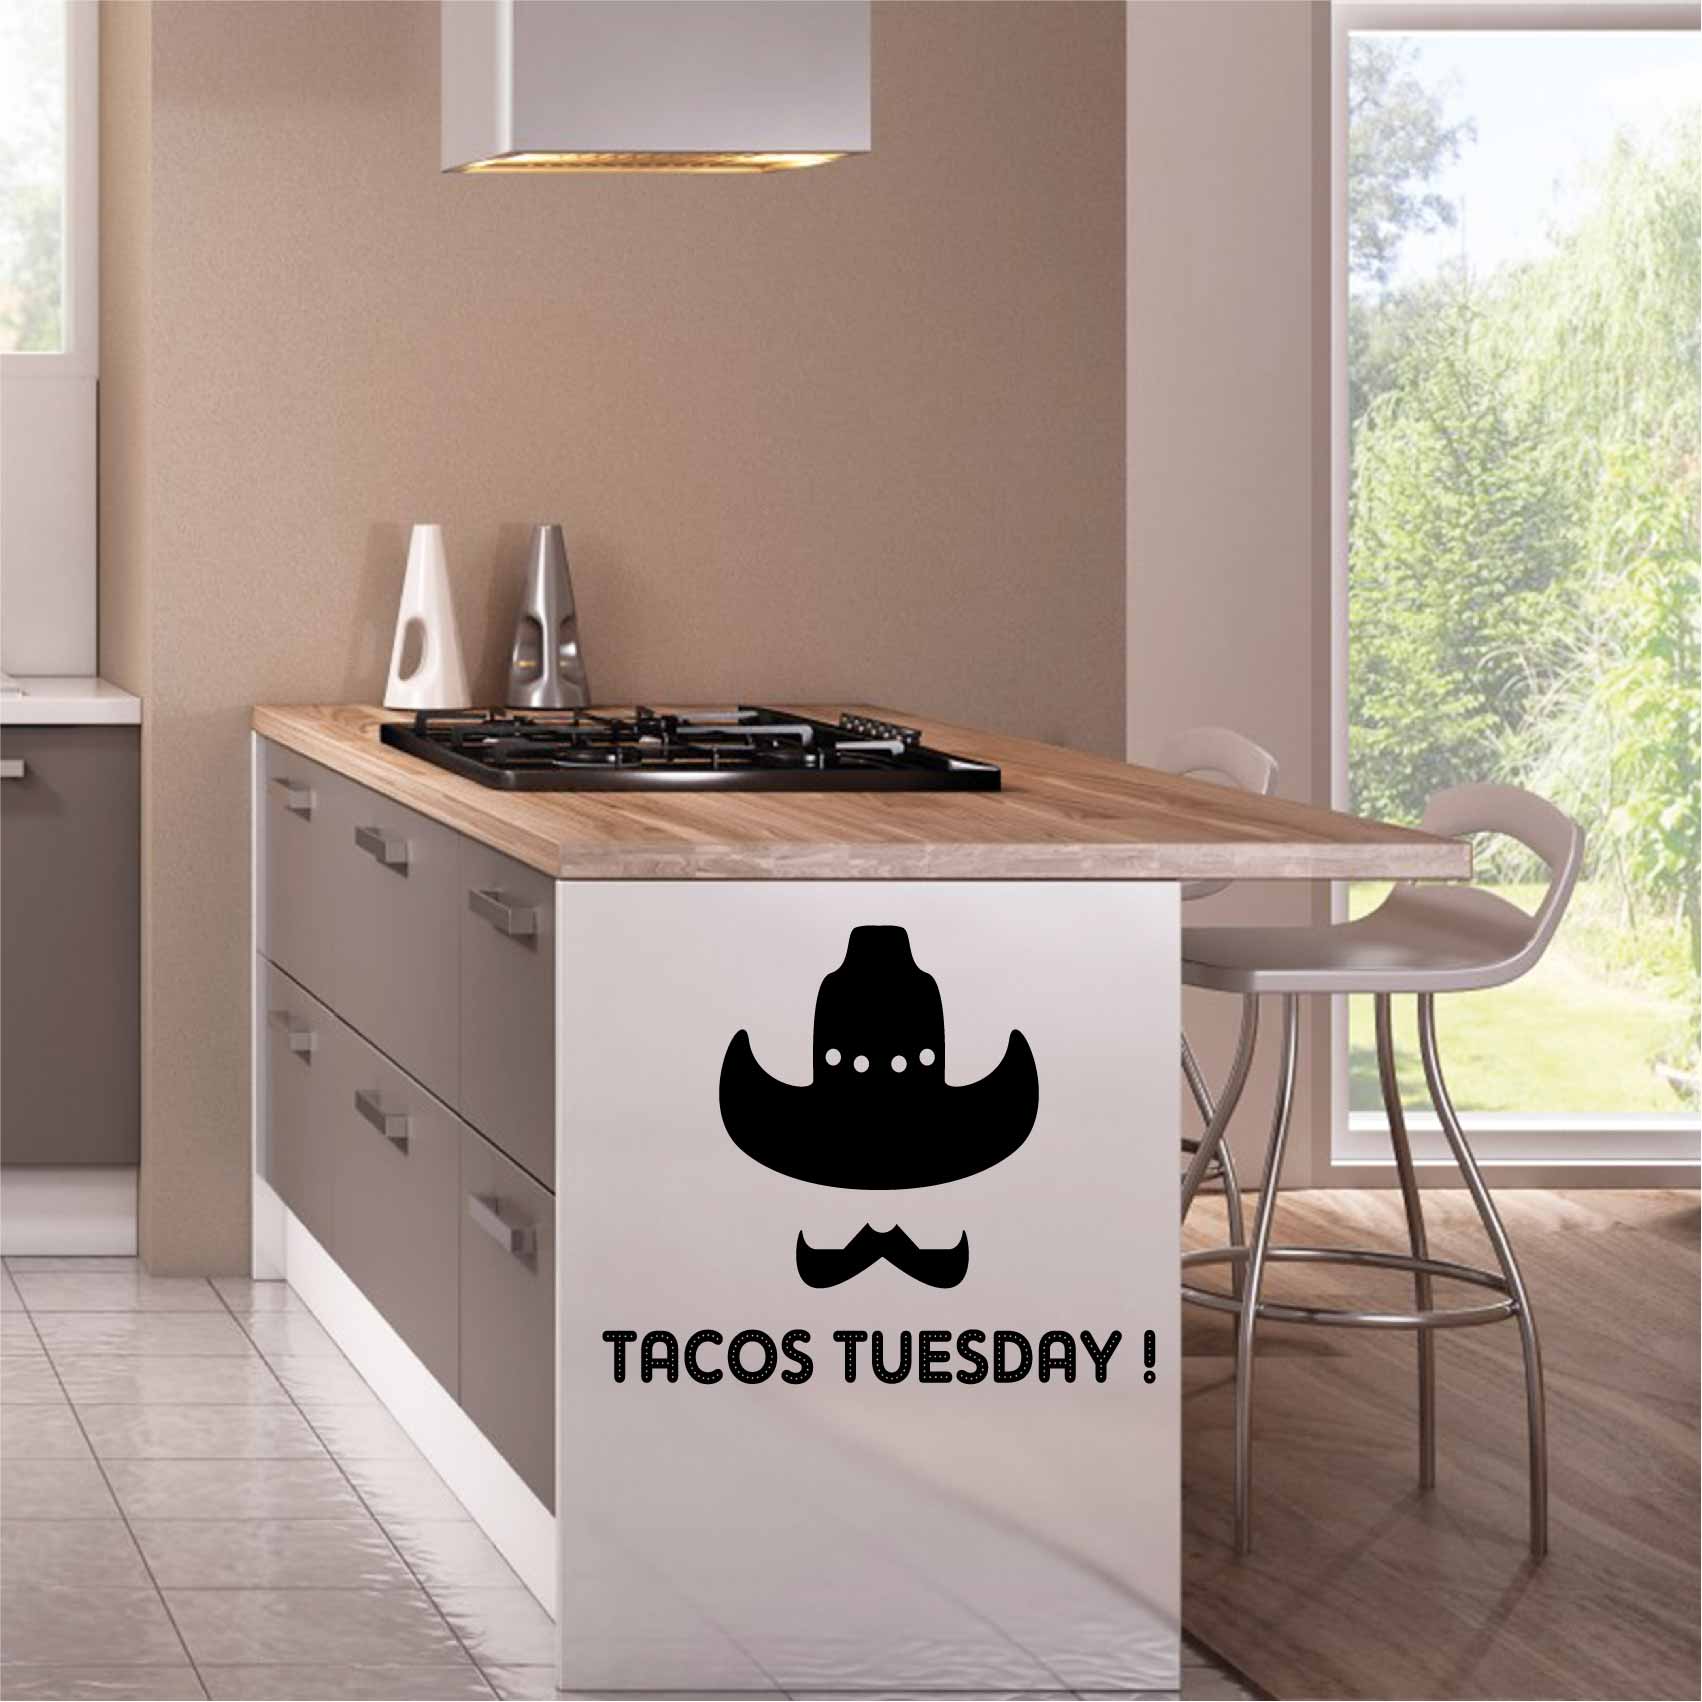 stickers-tacos-tuesday-chapeau-mexique-cuisine-ref1tacostuesday-autocollant-mural-stickers-muraux-sticker-deco-salon-chambre-min